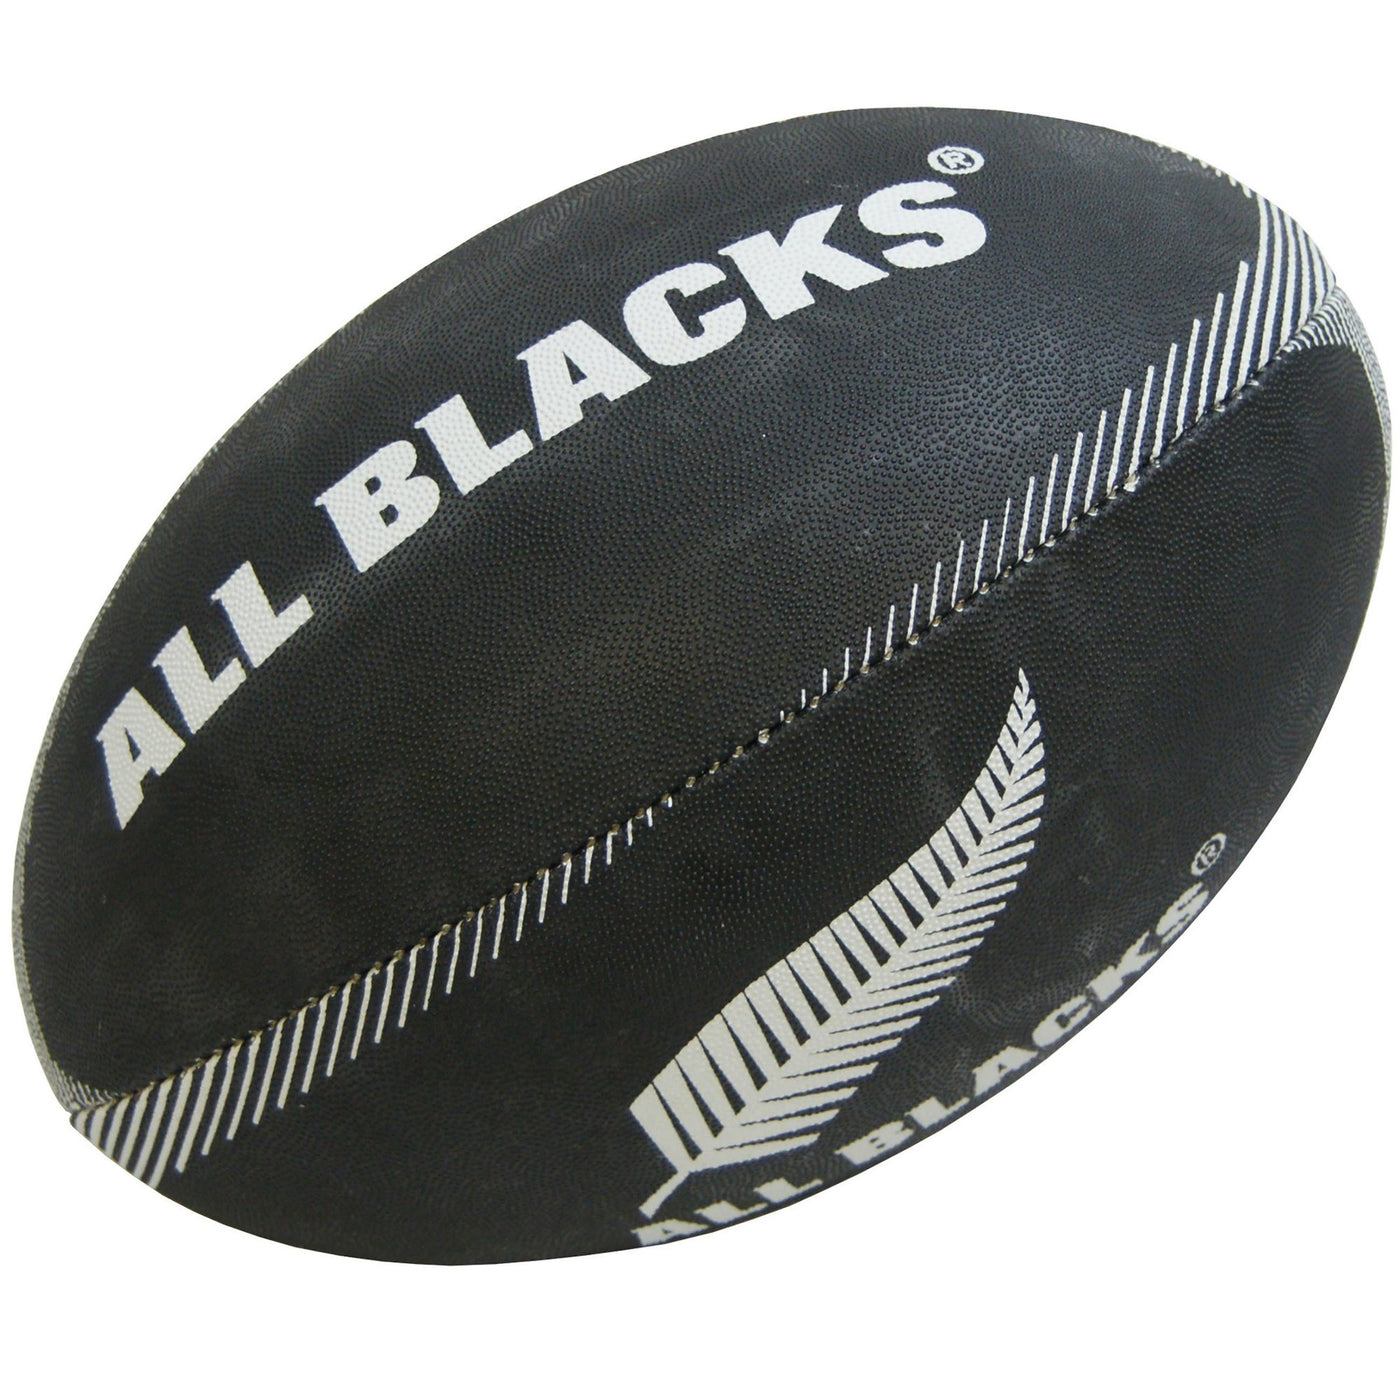 All Blacks Midi Rugbybal